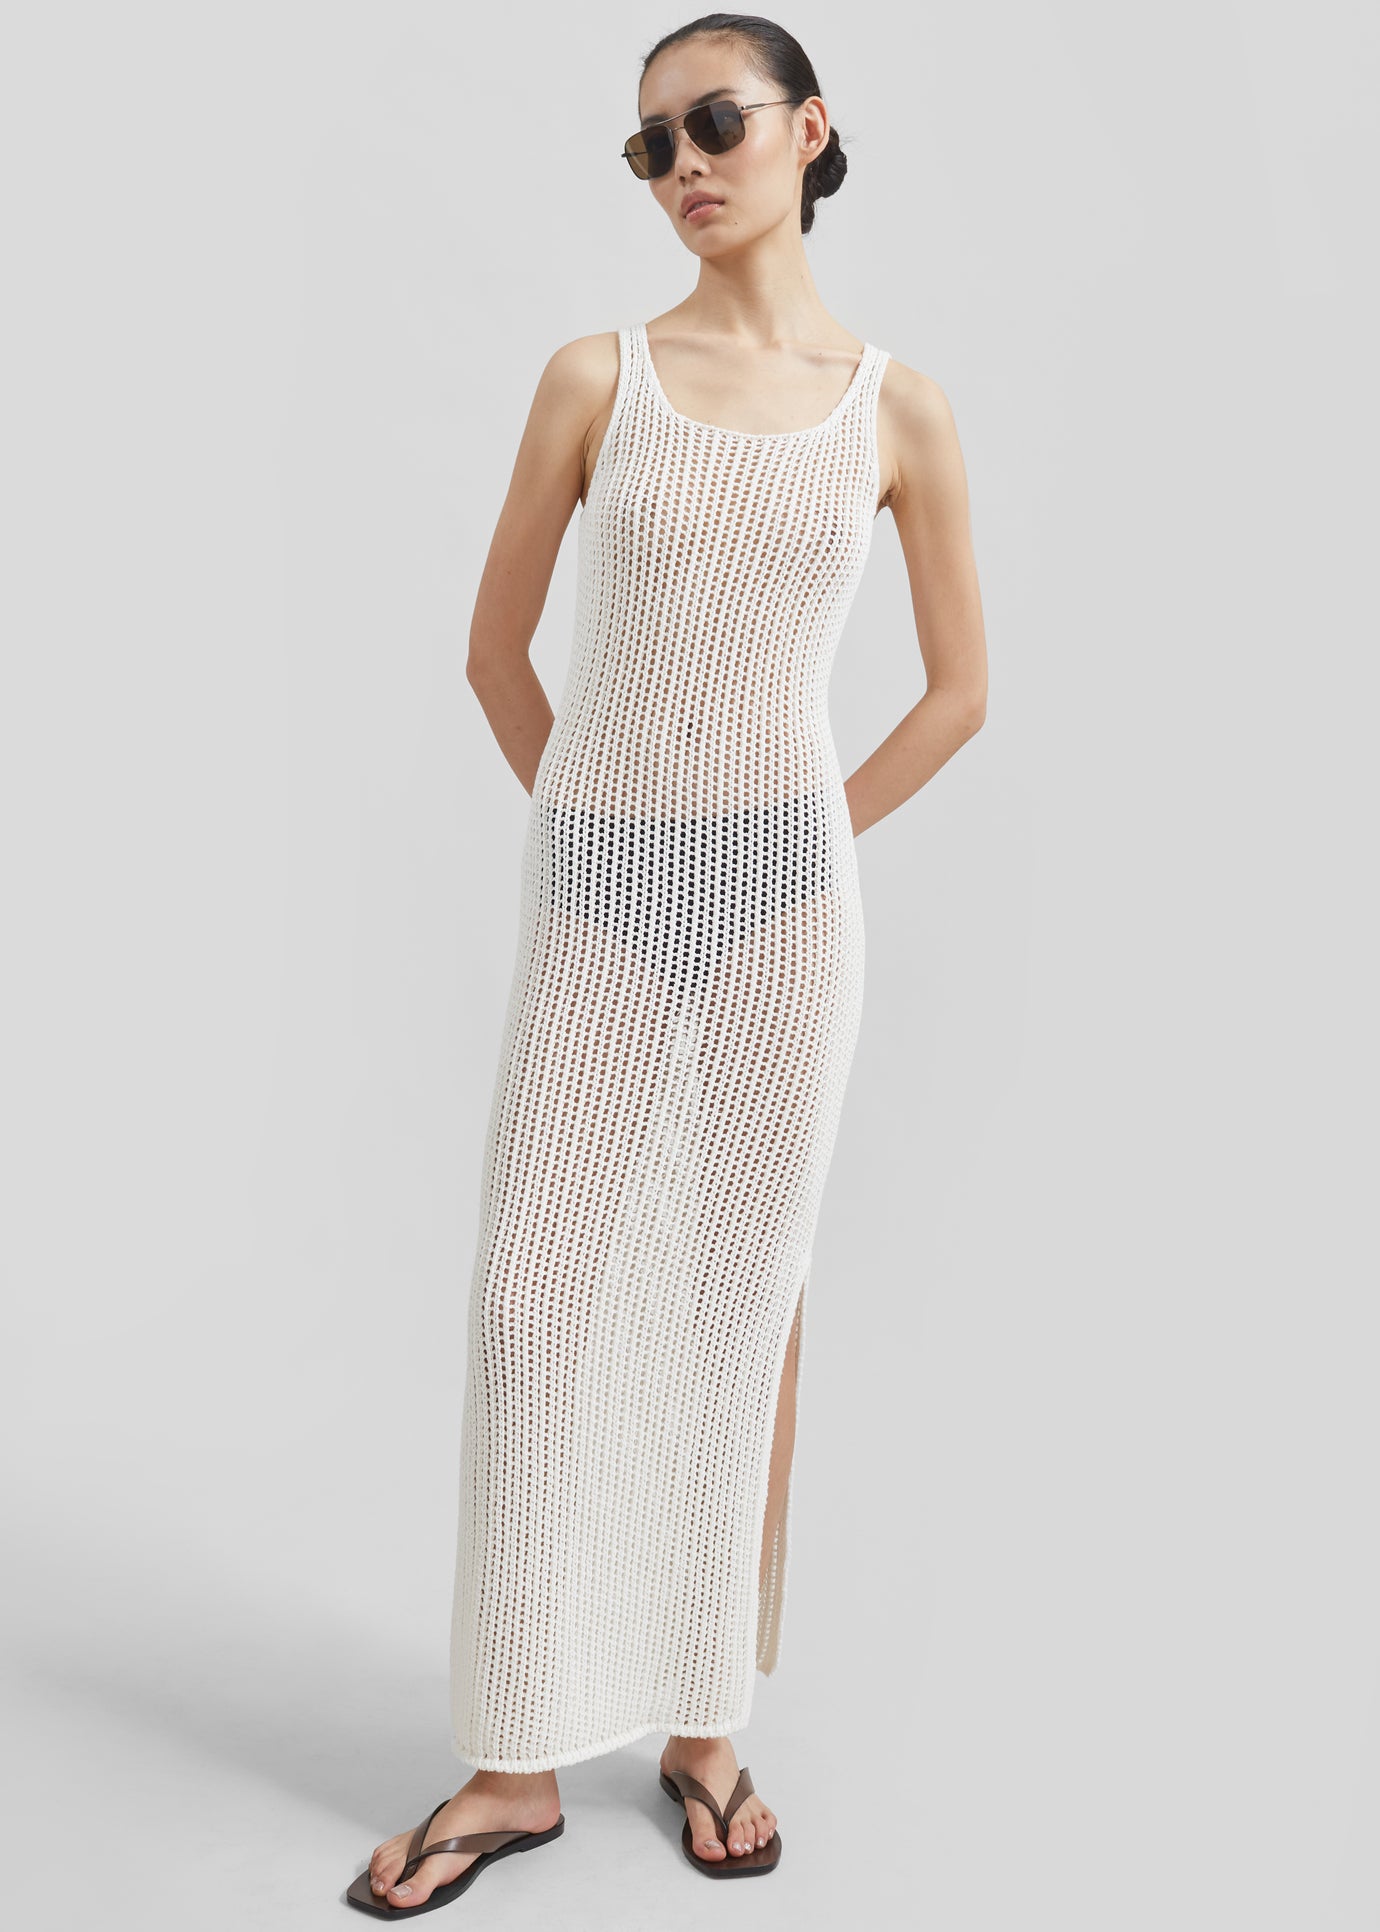 Adrienna Crochet Maxi Dress - White